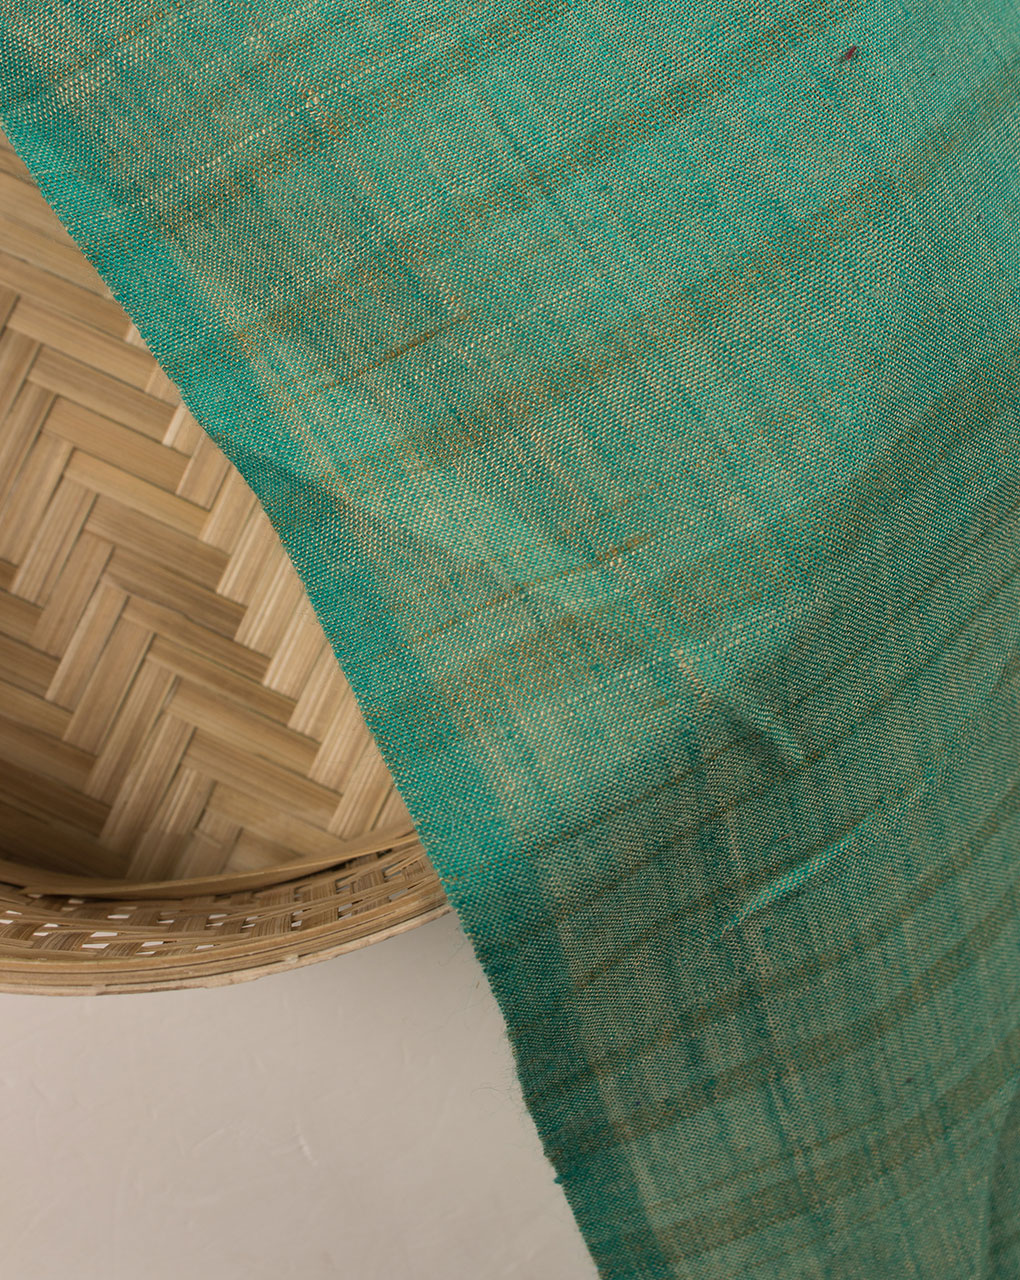 Sea Green Plain Woven Loom Textured Cotton Fabric - Fabriclore.com